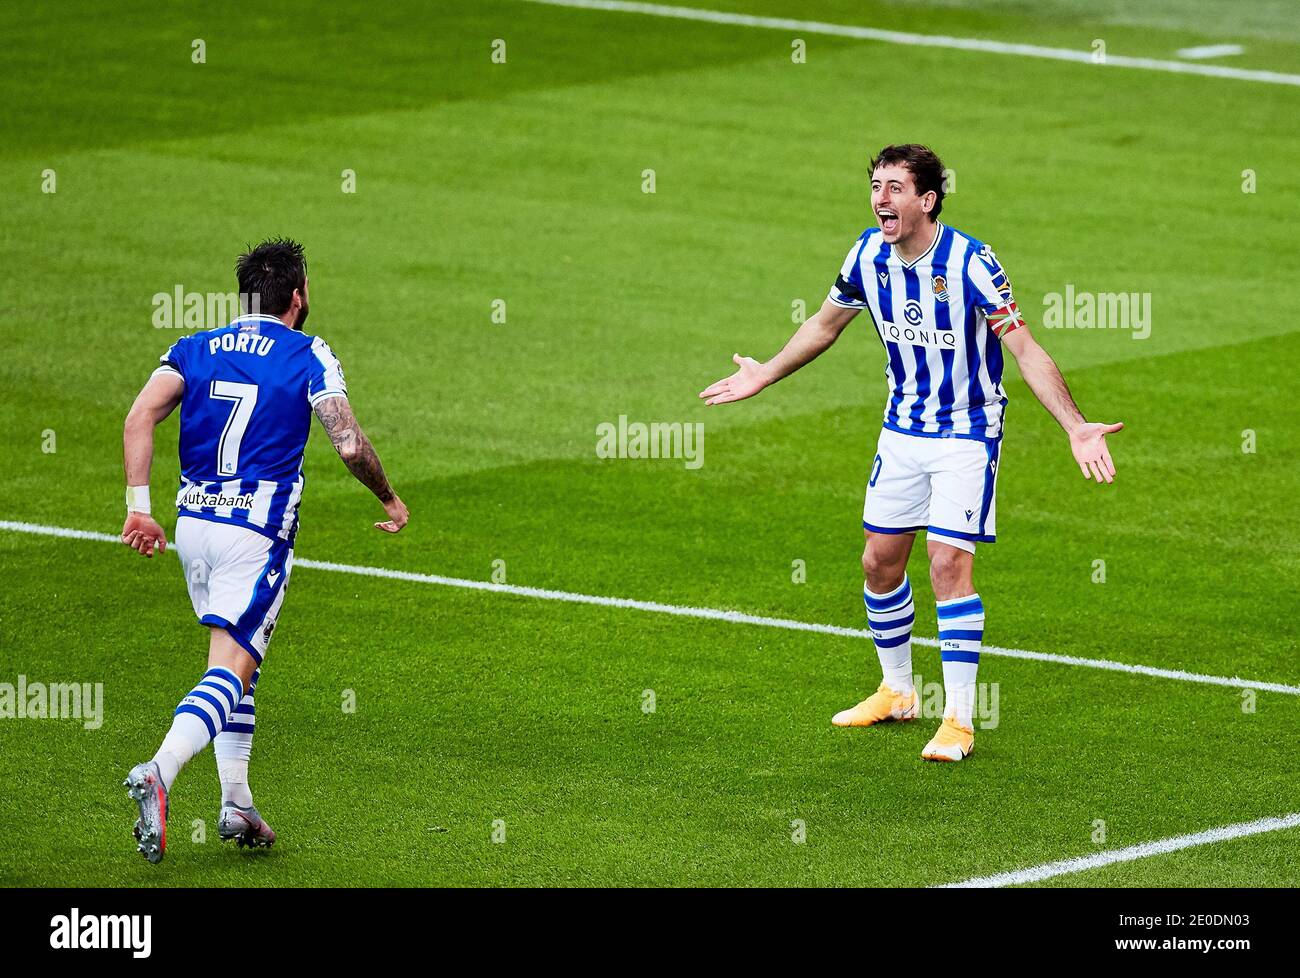 Cristian Portugues et Mikel Oyarazabal de Real Sociedad célébrant un but  lors du championnat espagnol la Liga football match entre Athletic Club et  Real Sociedad le 31 décembre 2020 au stade San